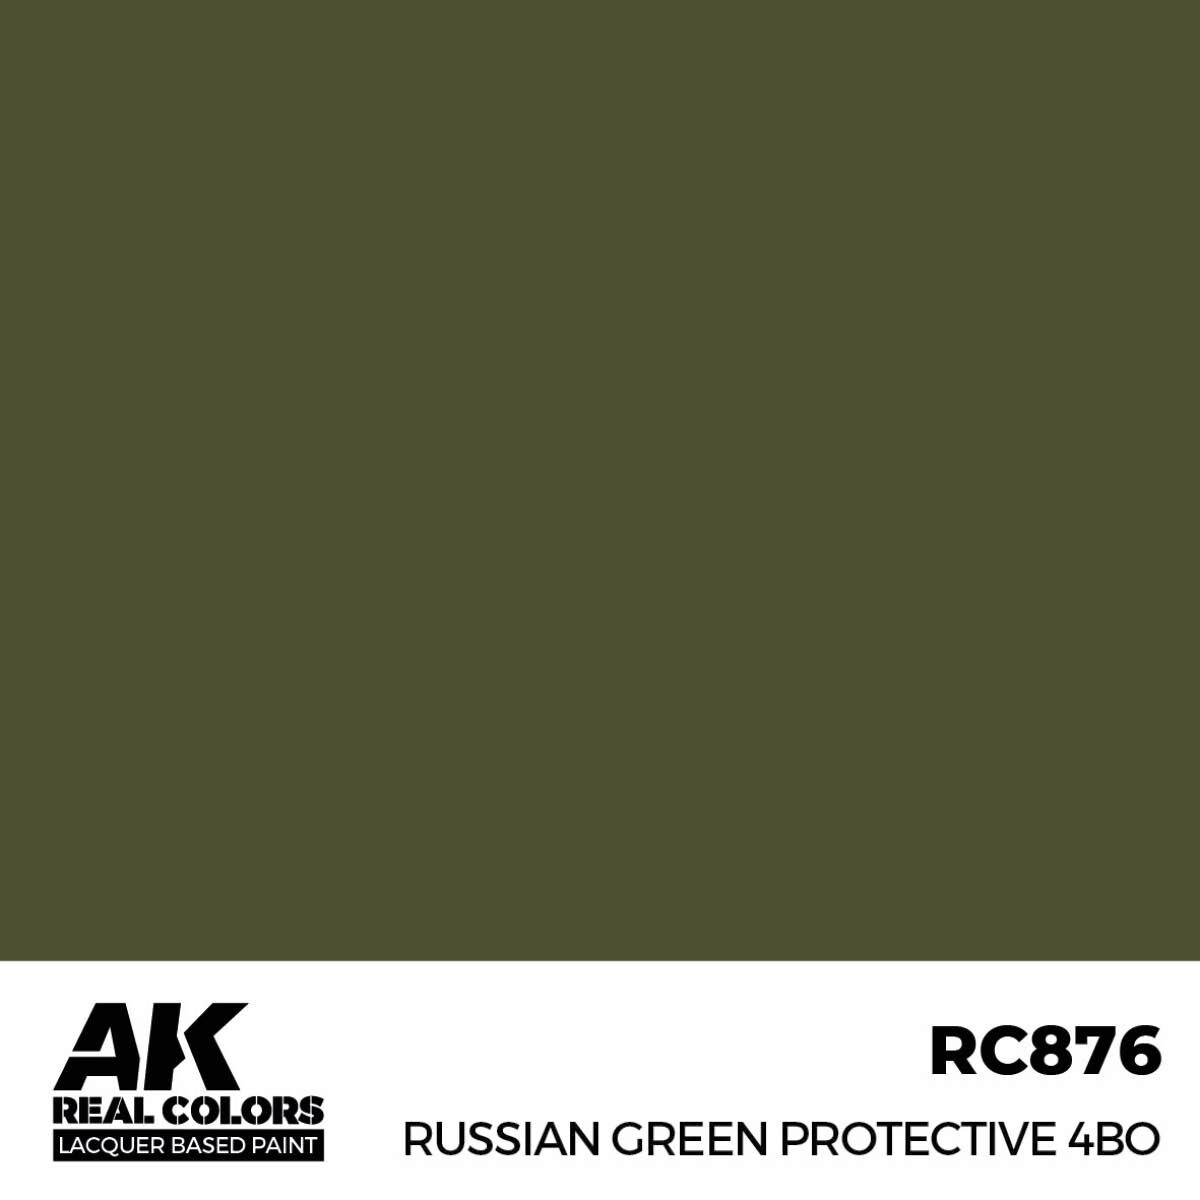 AK RC876 Real Colors Russian Green Protective 4BO 17 ml.